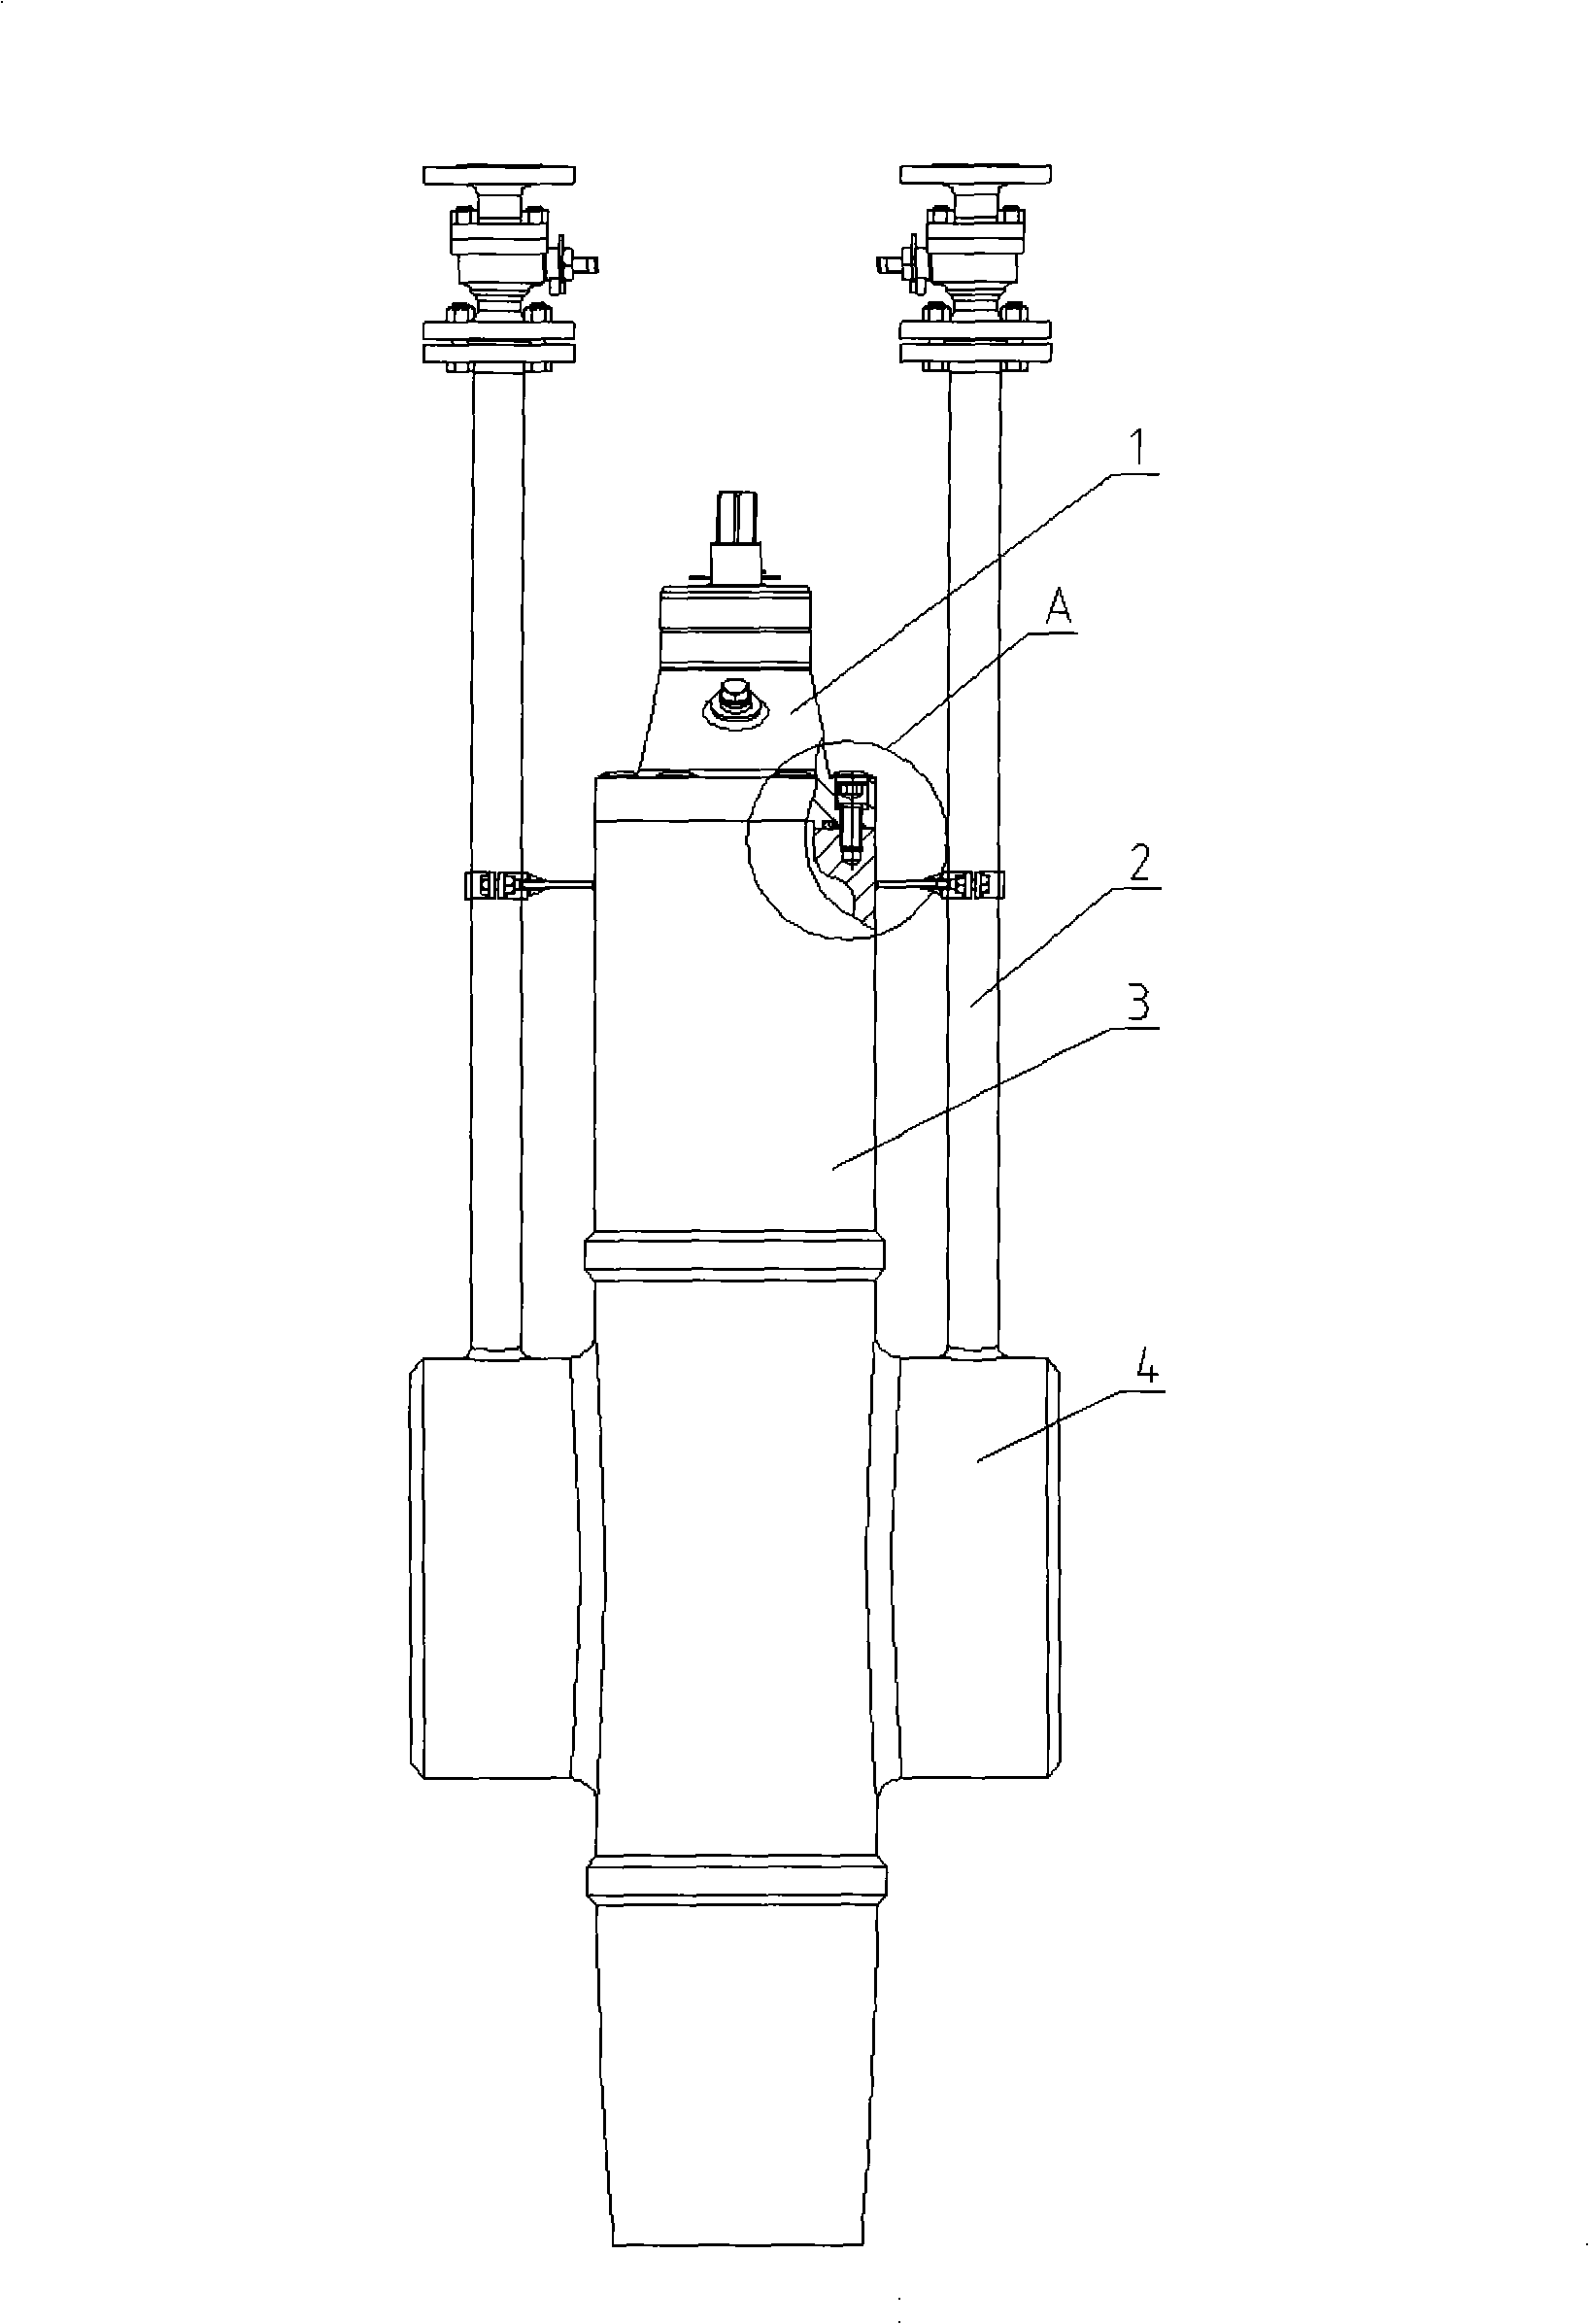 Direct-buried gate valve